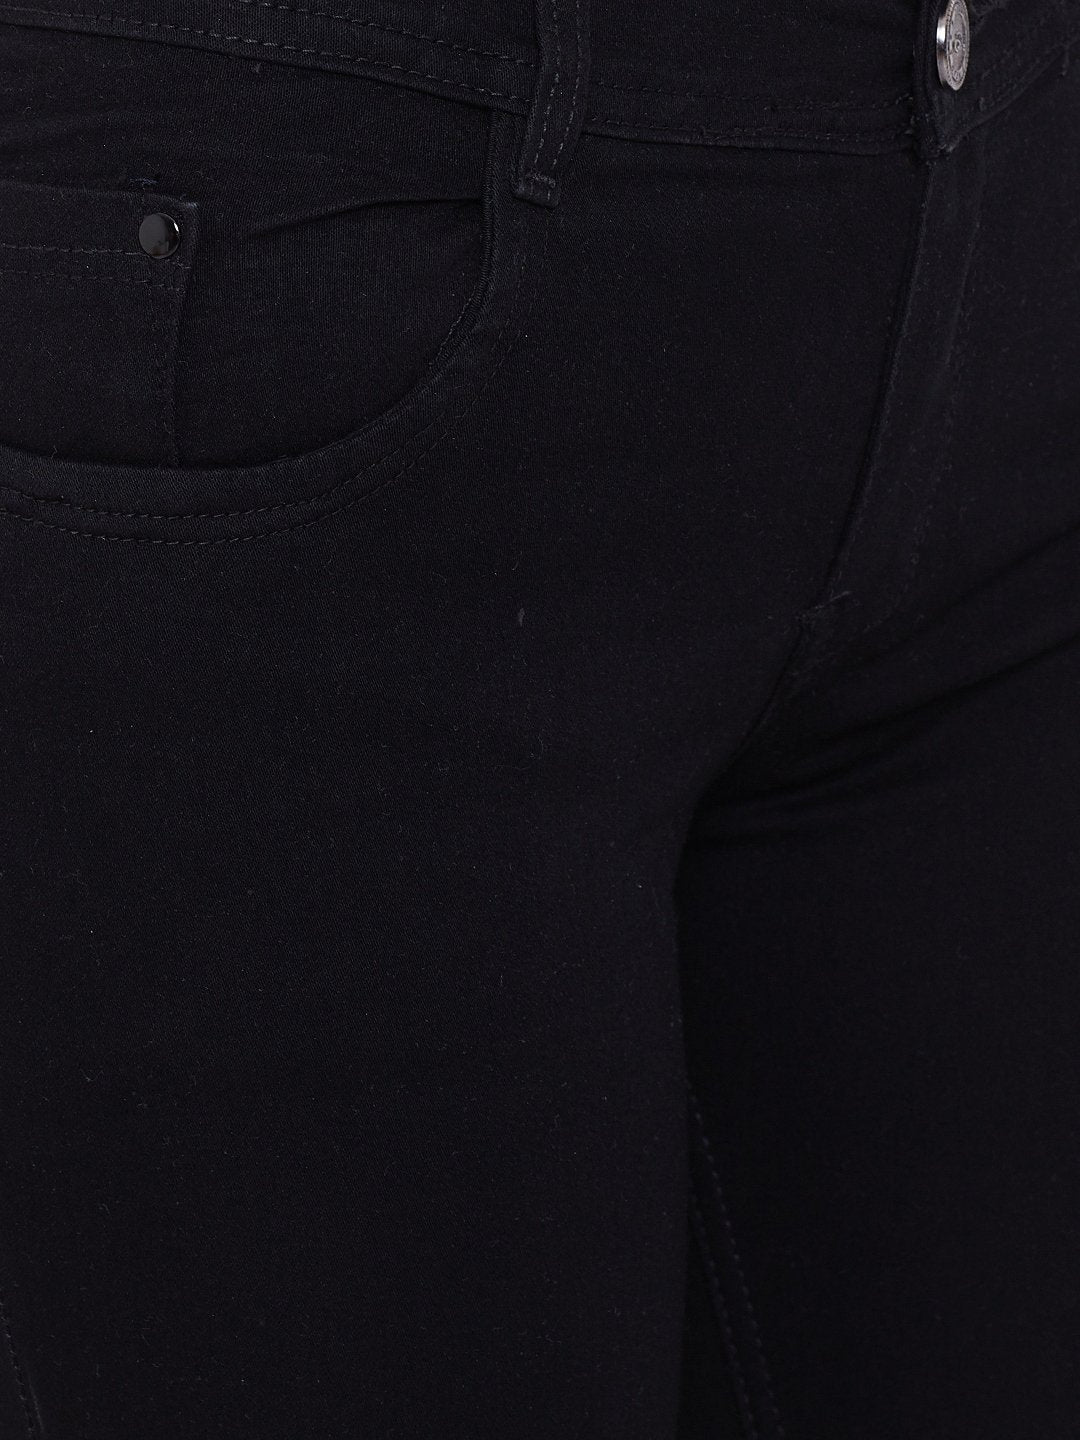 Slim Fit Stretchable Black Capris - NiftyJeans